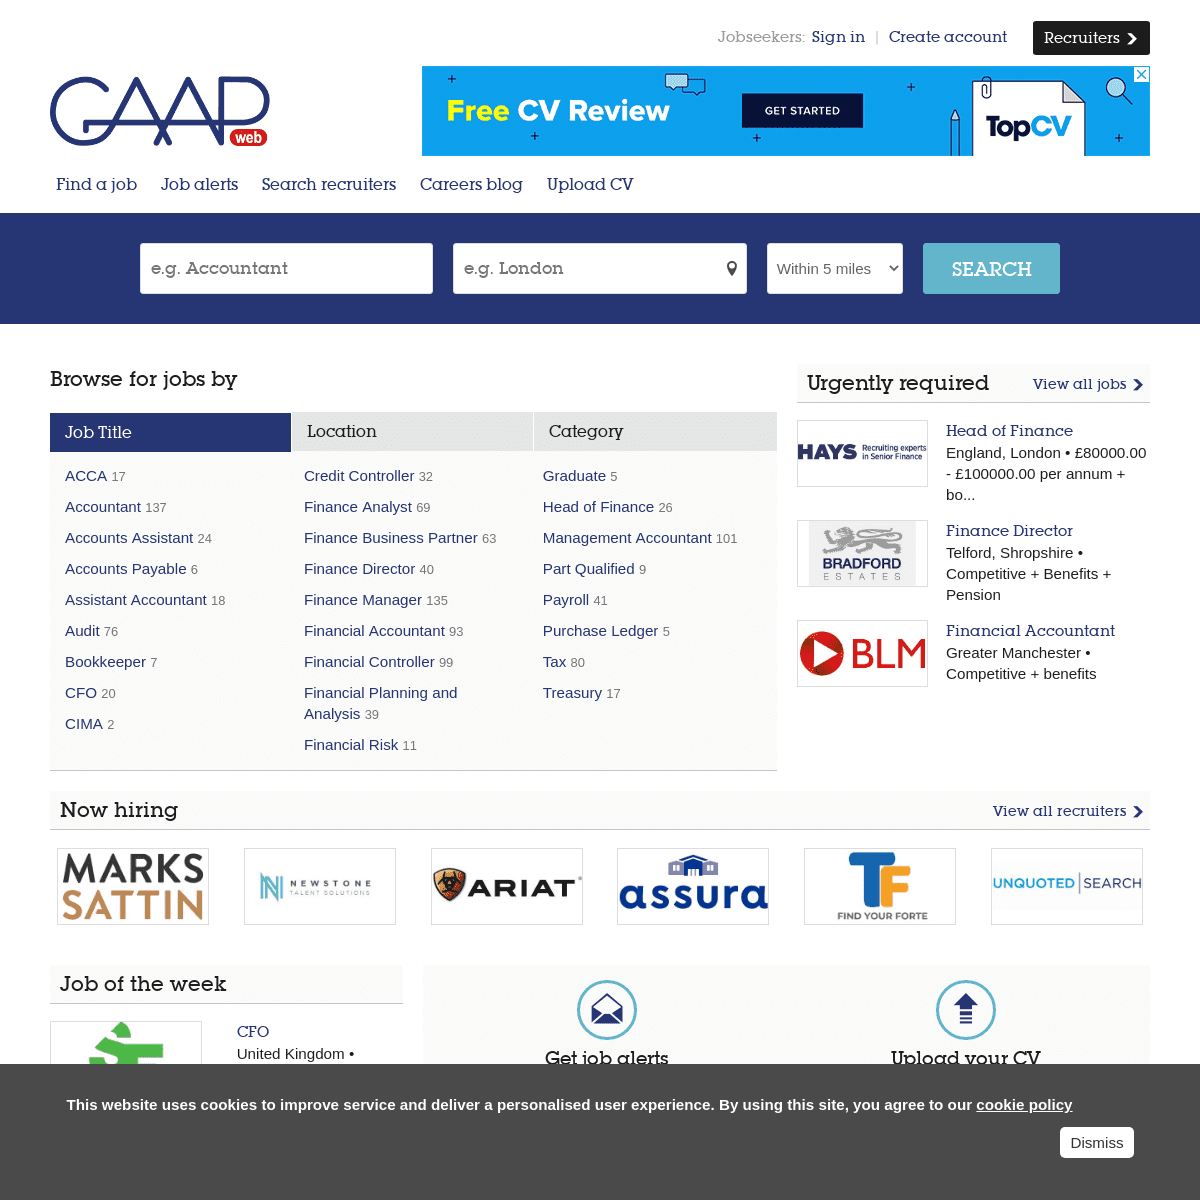 A complete backup of gaapweb.com